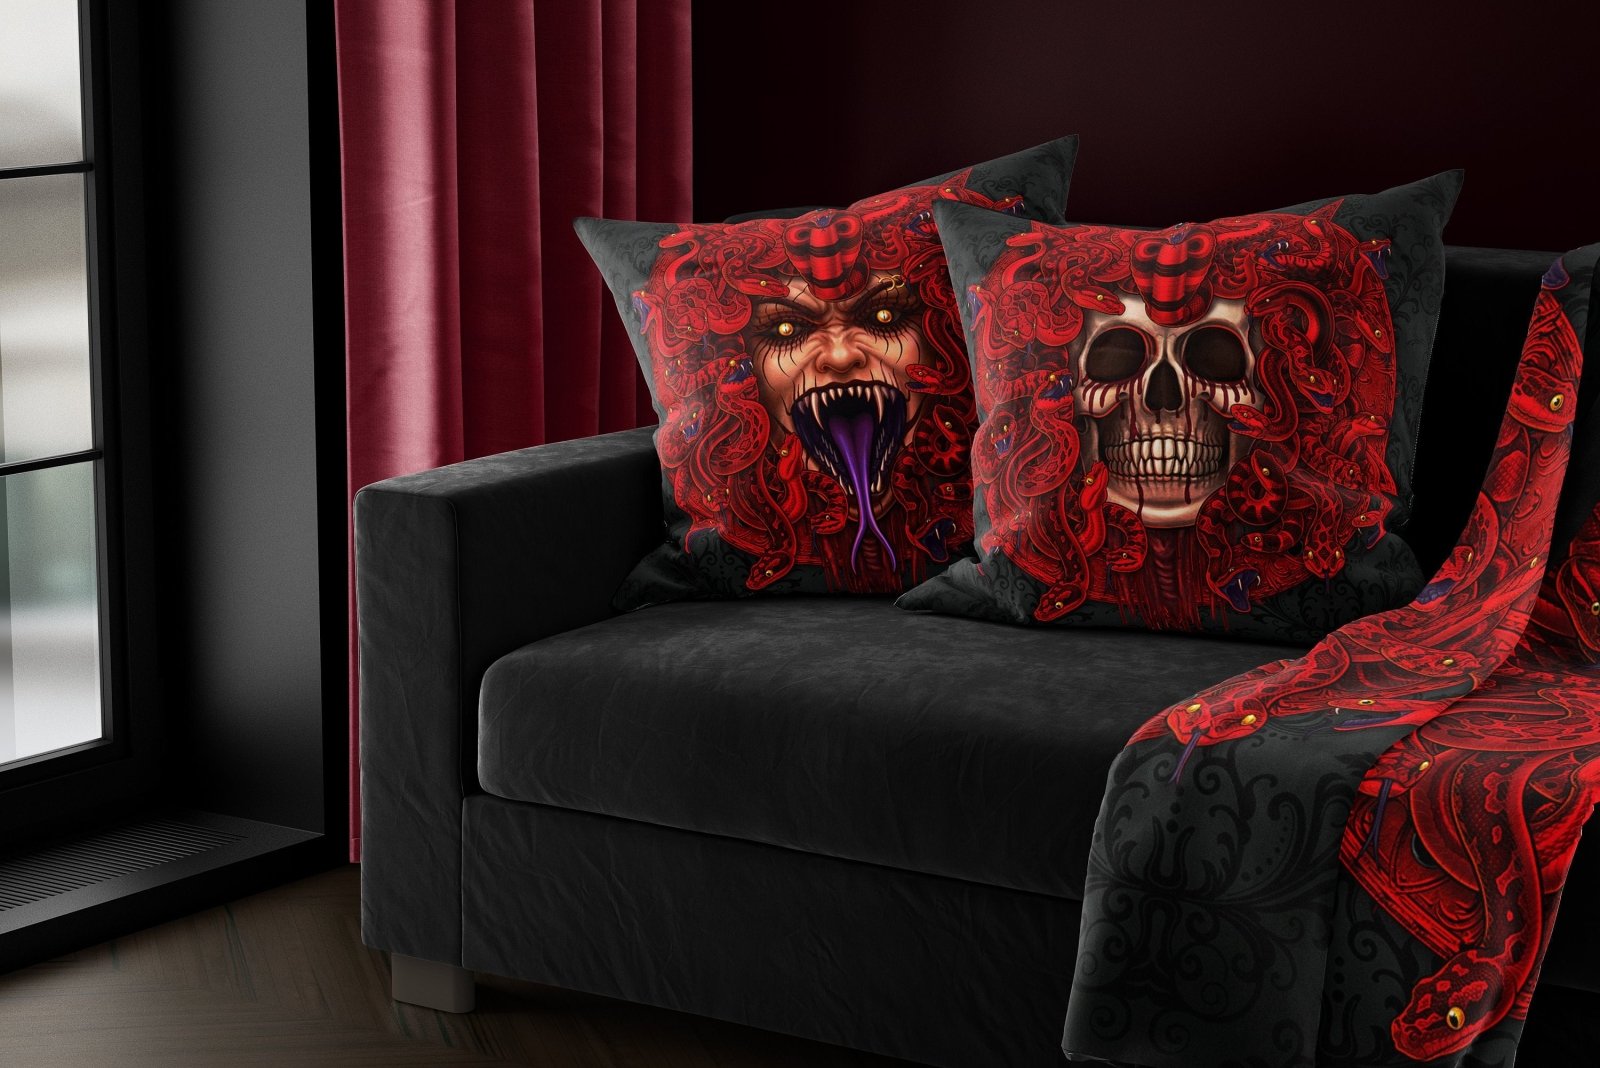 Demon Throw Pillow, Decorative Accent Cushion, Medusa, Satanic and Gothic Room Decor, Horror Art, Alternative Home - Red Pentagram & Snakes, Rage - Abysm Internal